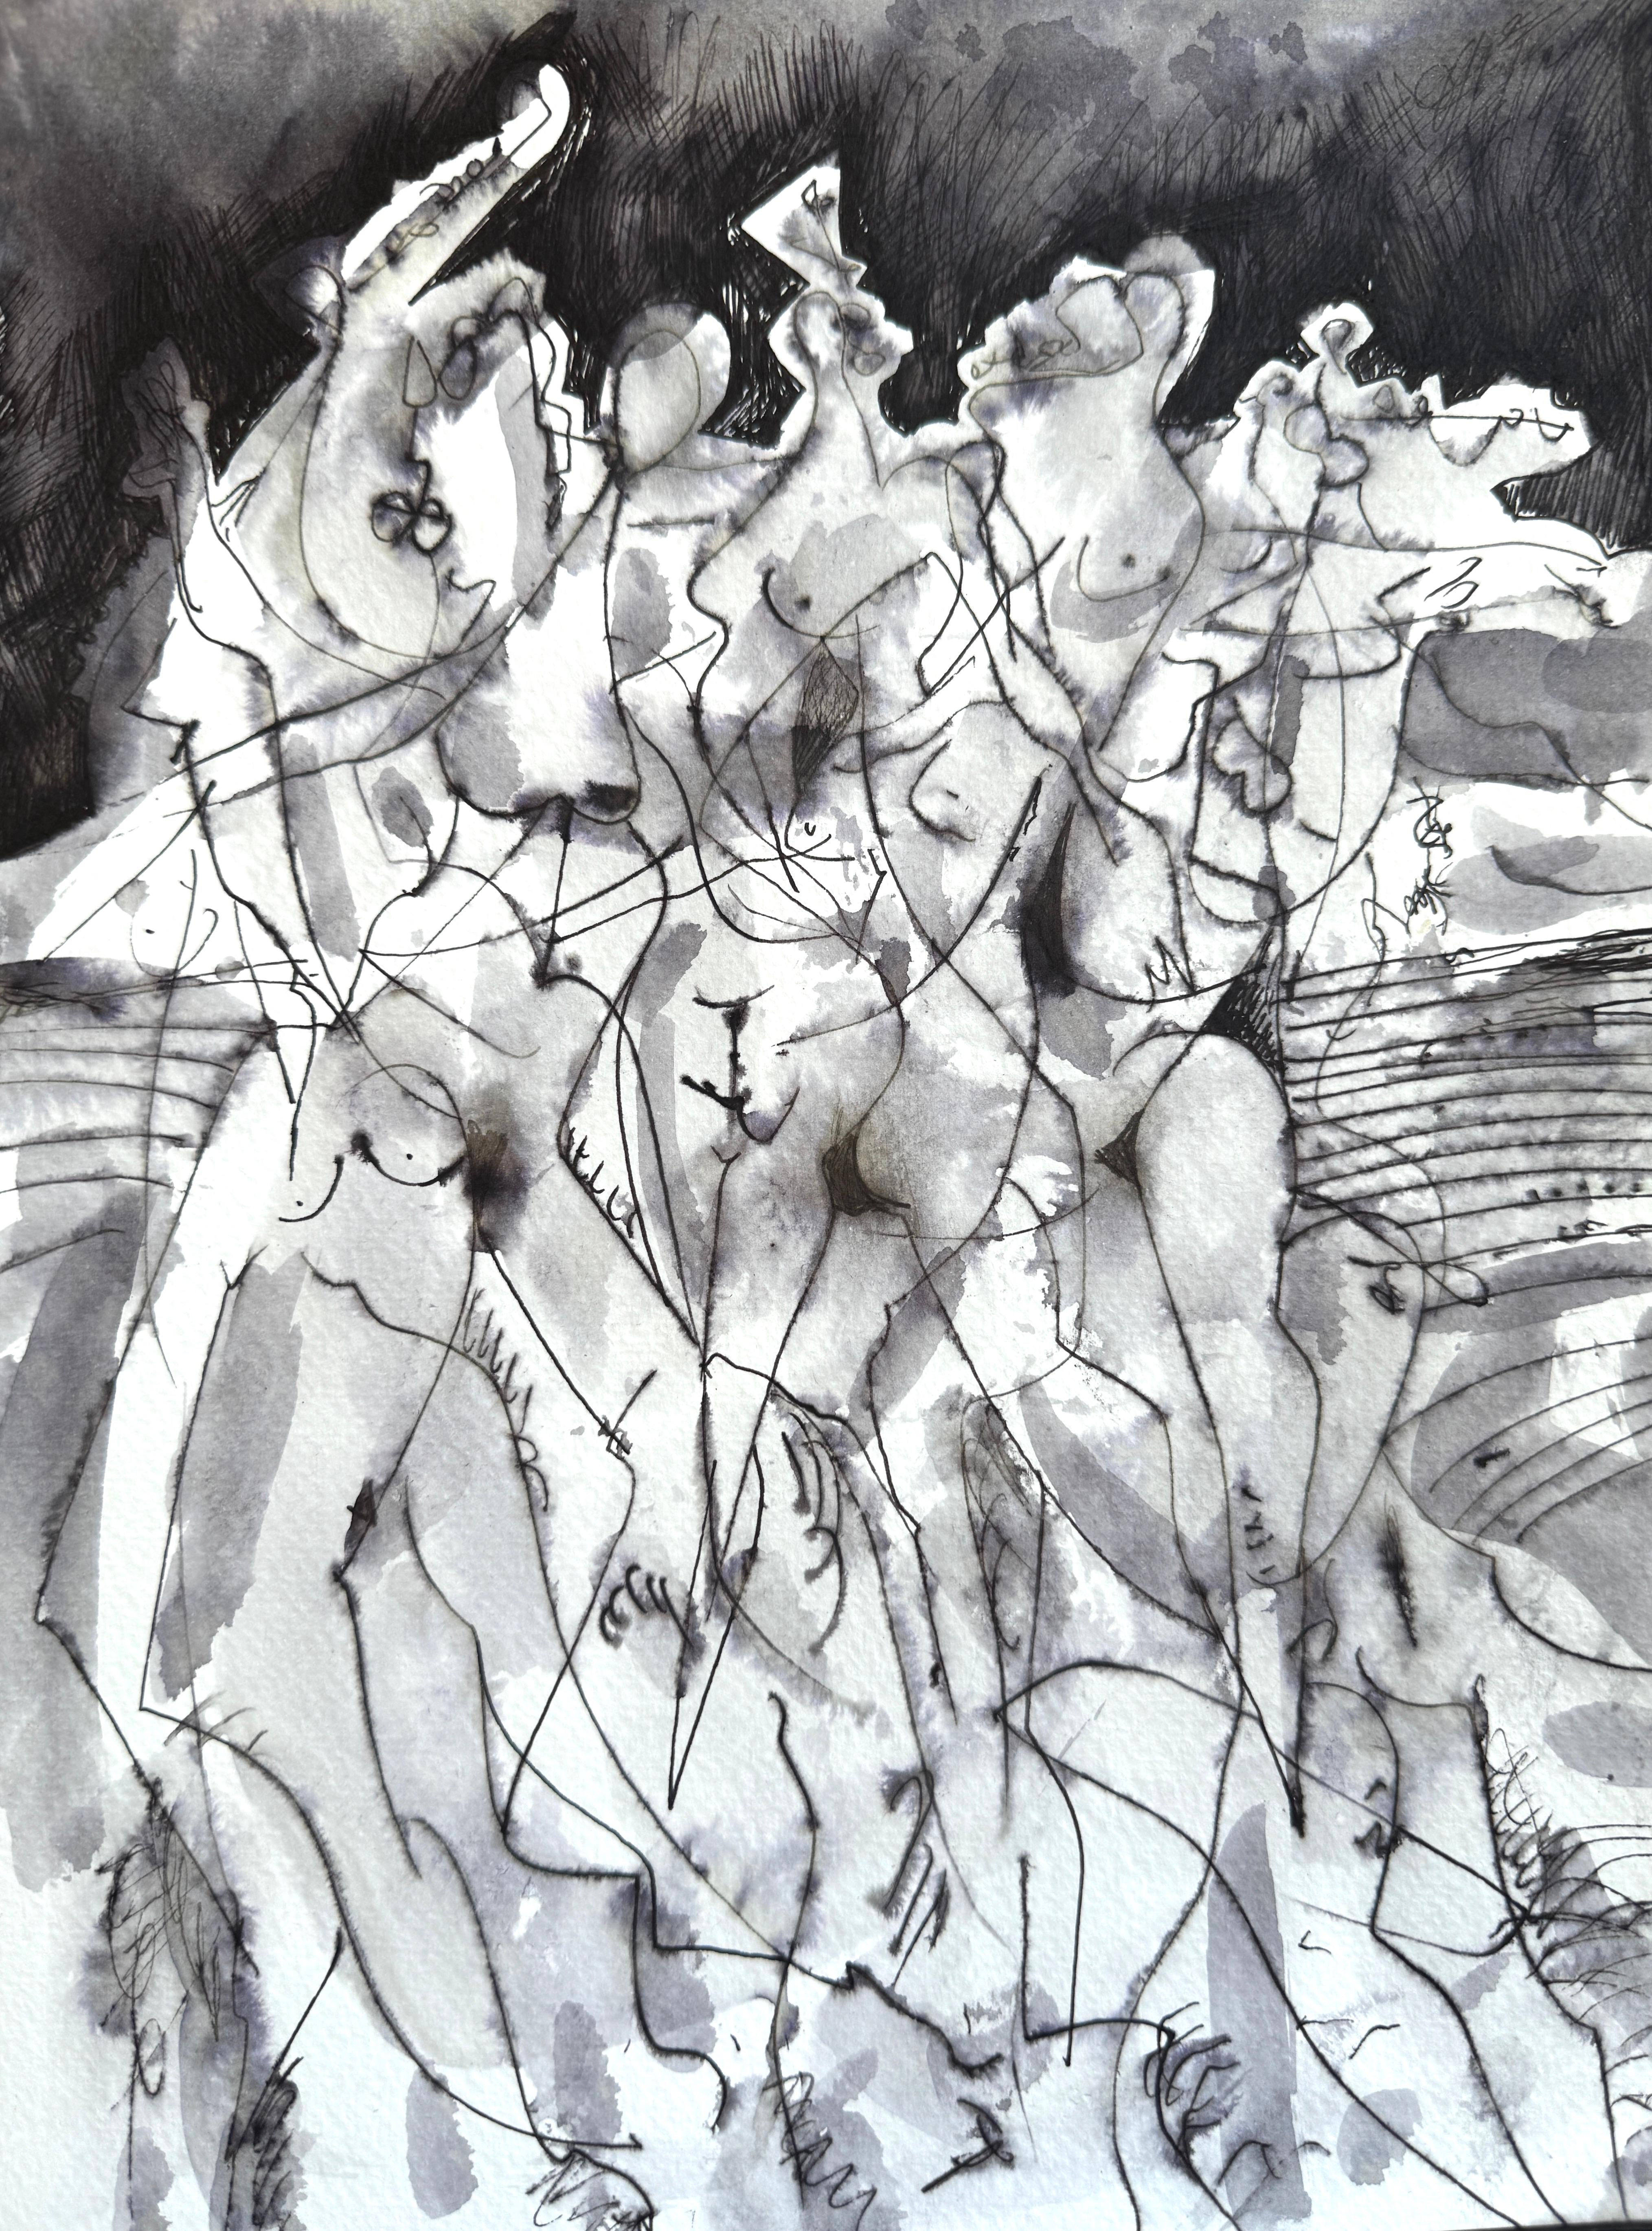 Joyful Noise, Figurative Original Painting, Ink on Paper, Black and White 